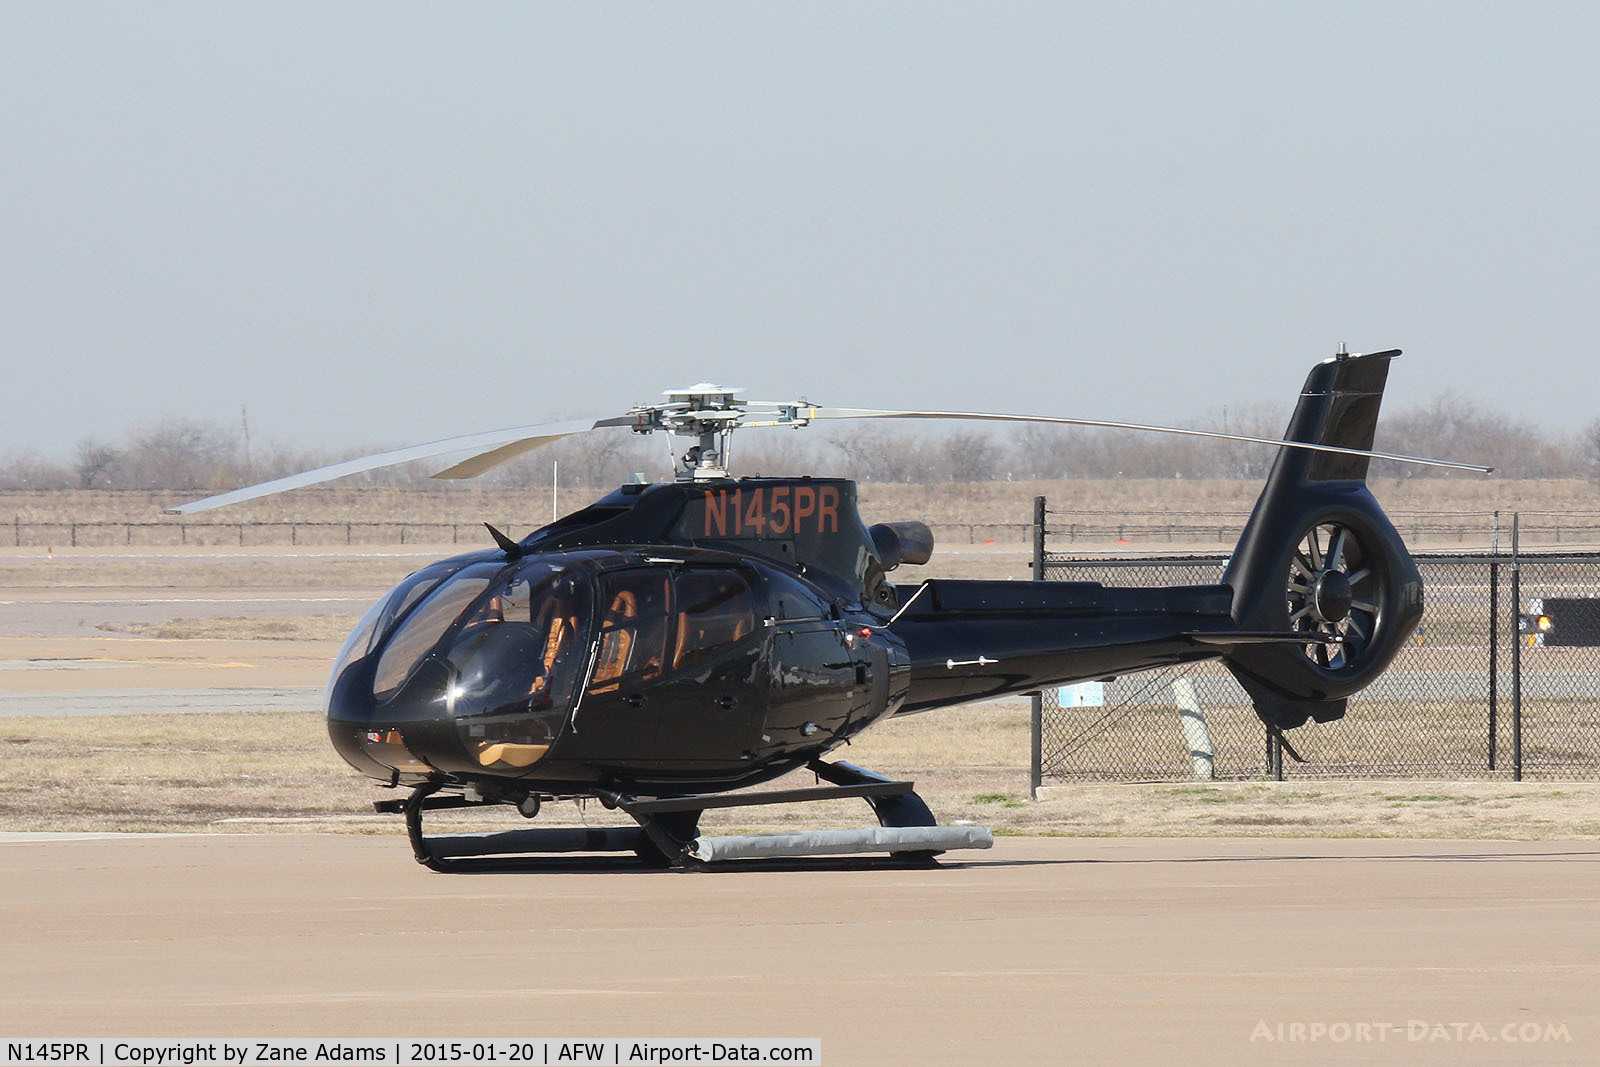 N145PR, 2012 Eurocopter EC-130 C/N 7349, At Alliance Airport - Fort Worth, TX